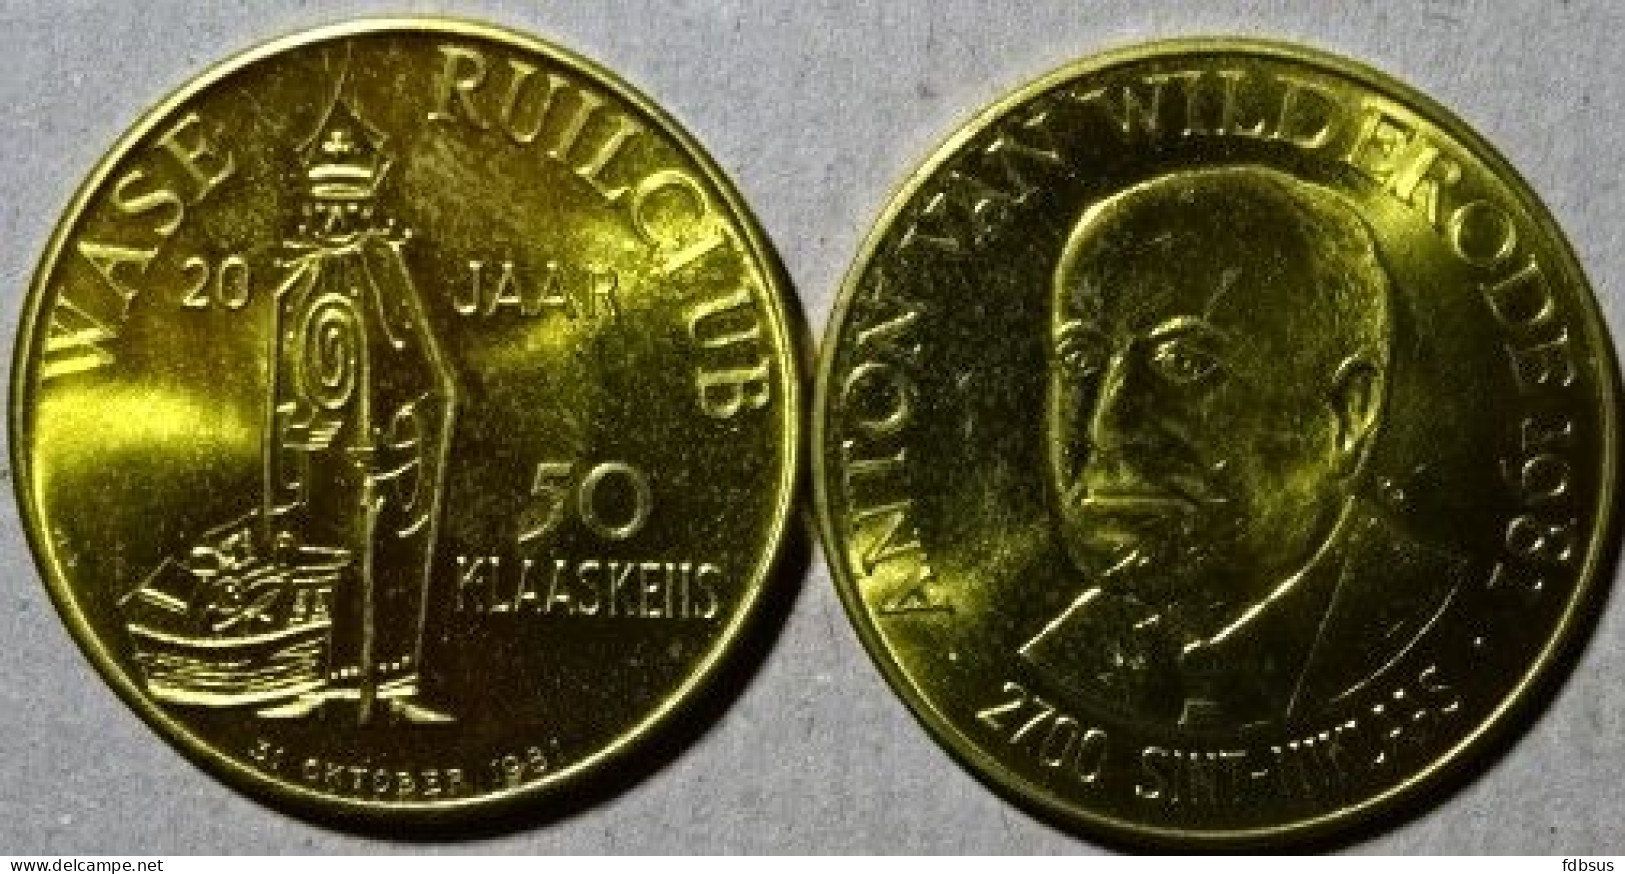 1981   2700 Sint Niklaas 20 Jaar Wase Ruilclub 50 Klaaskens - Token - Penning -  Anton Van Wilderode - Monete Allungate (penny Souvenirs)